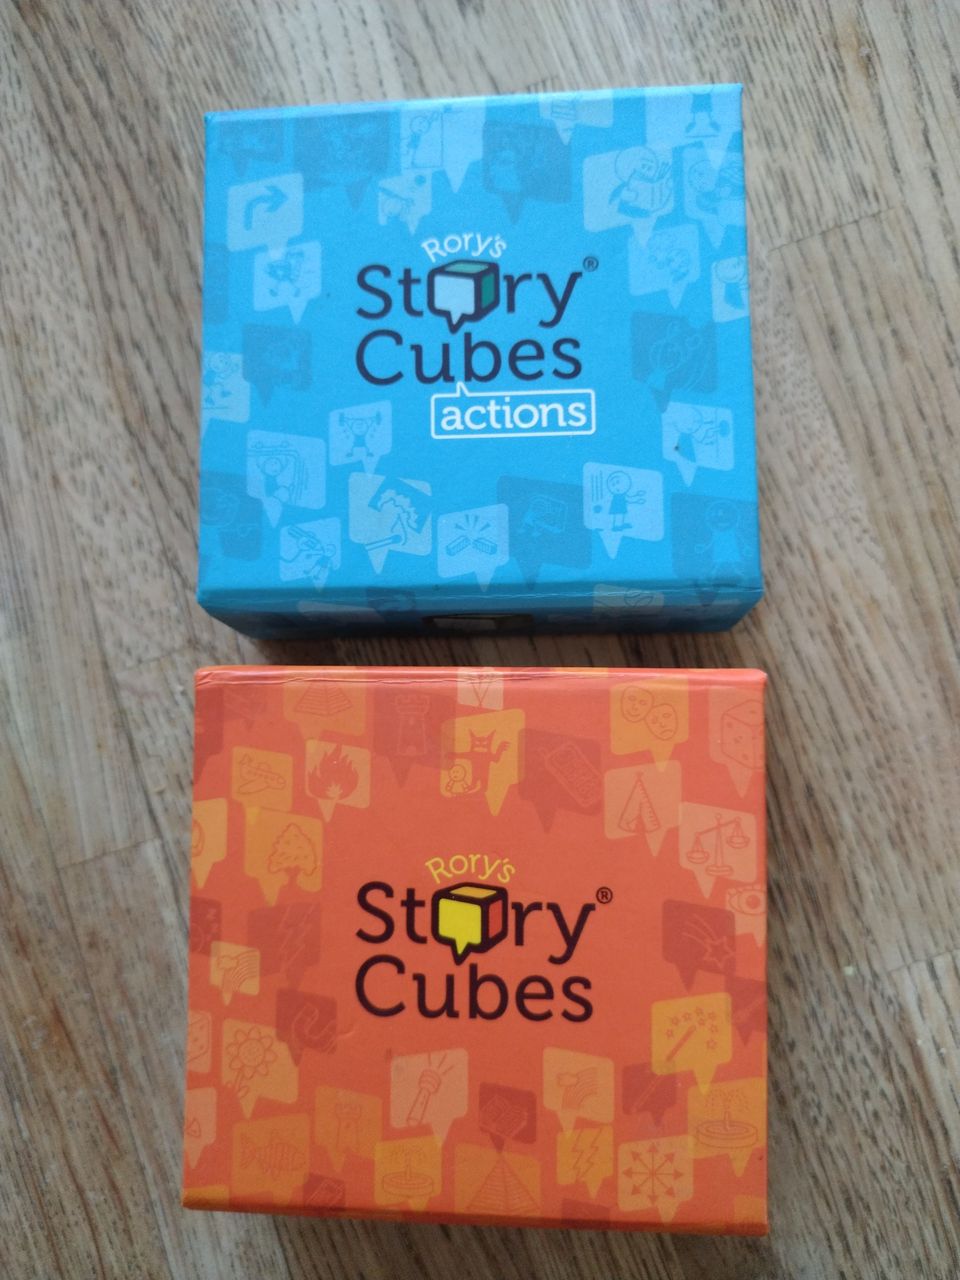 Rory's Story cubes, tarinanopat